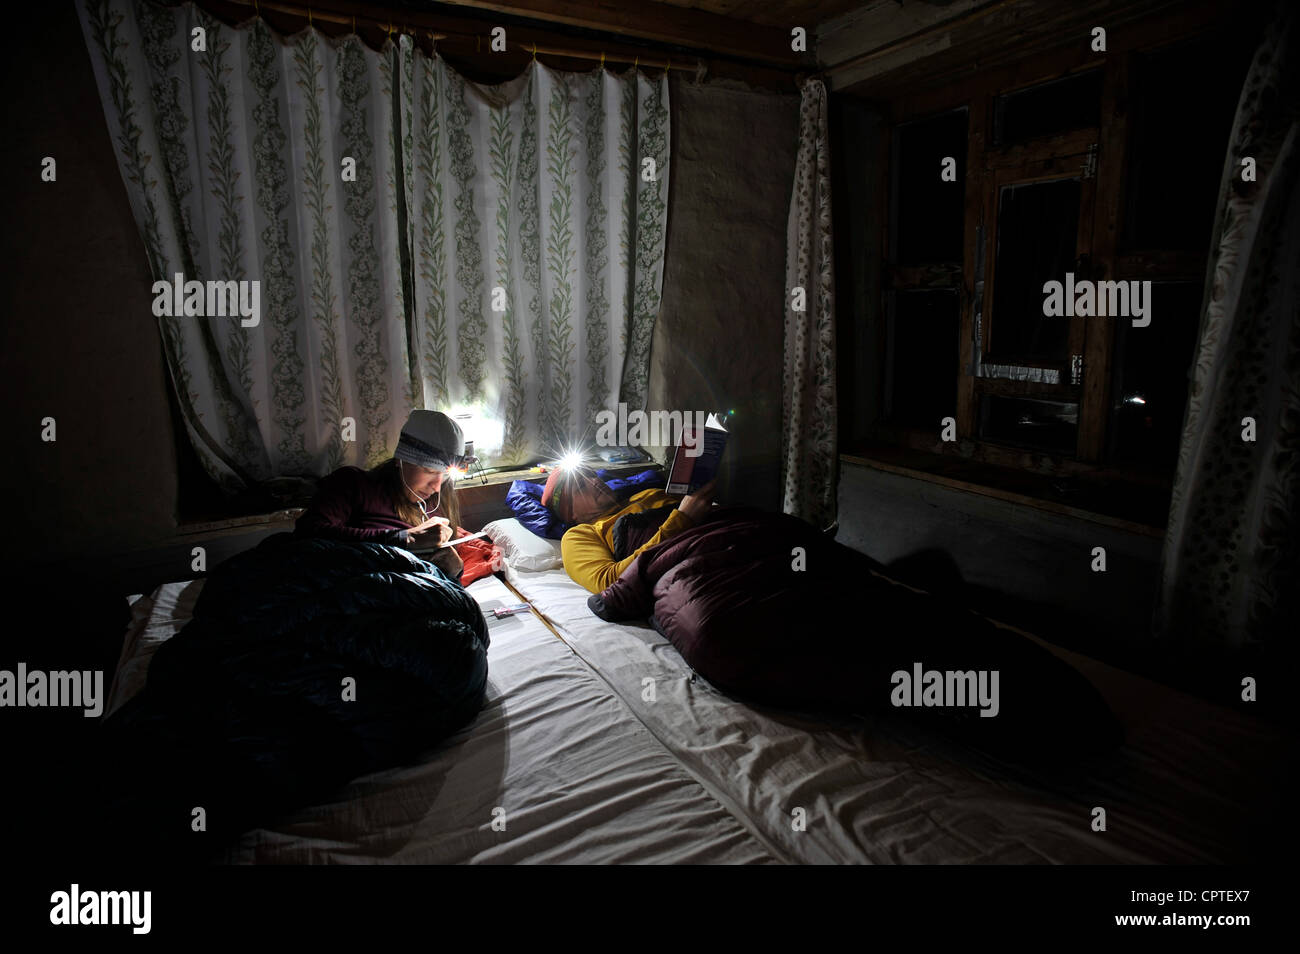 Couple in room in sleeping bags, Yak Kharka, Nepal Stock Photo